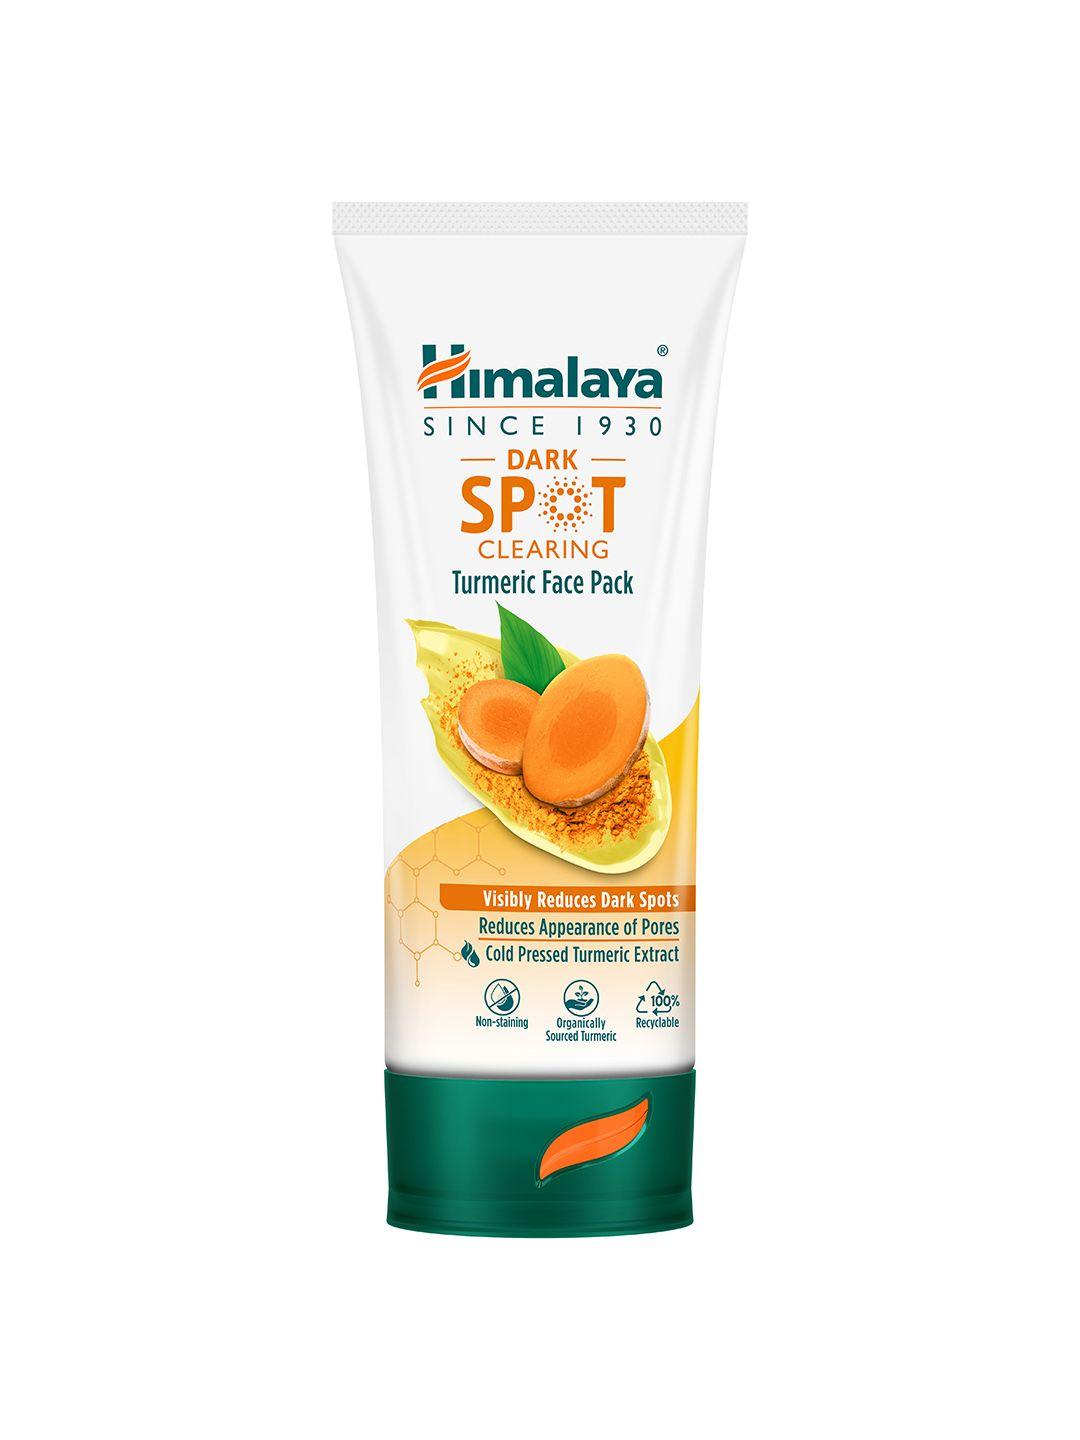 himalaya dark spot clearing turmeric face pack to reduce dark spots & pores - 50g